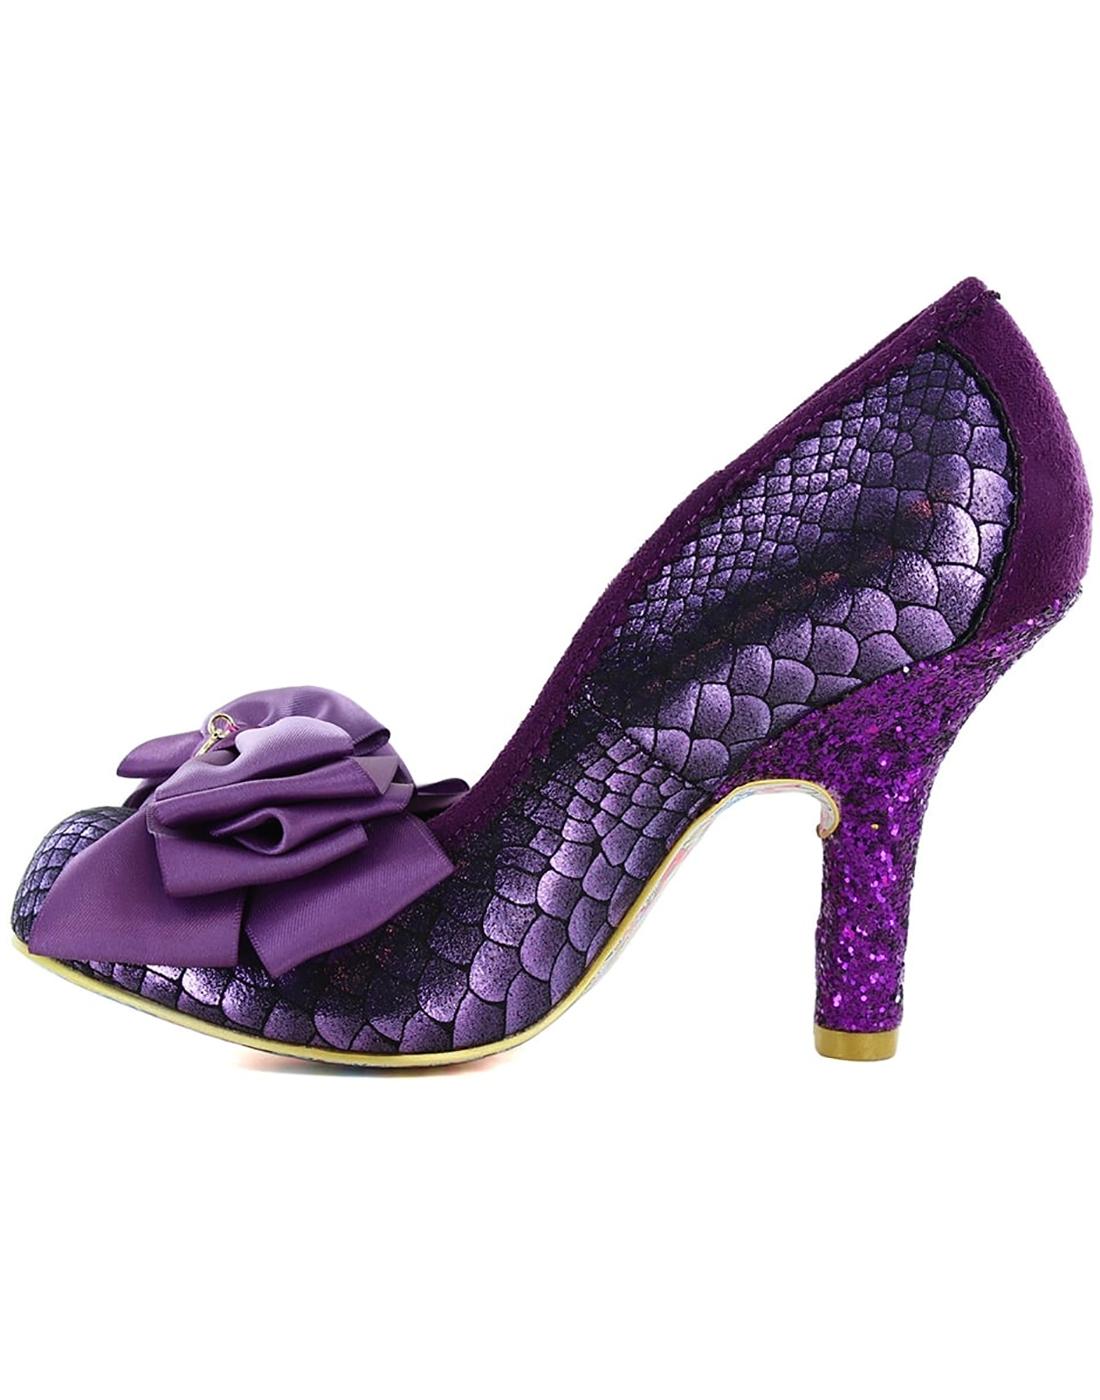 IRREGULAR CHOICE Ascot Retro Vintage Bow Heels in Purple